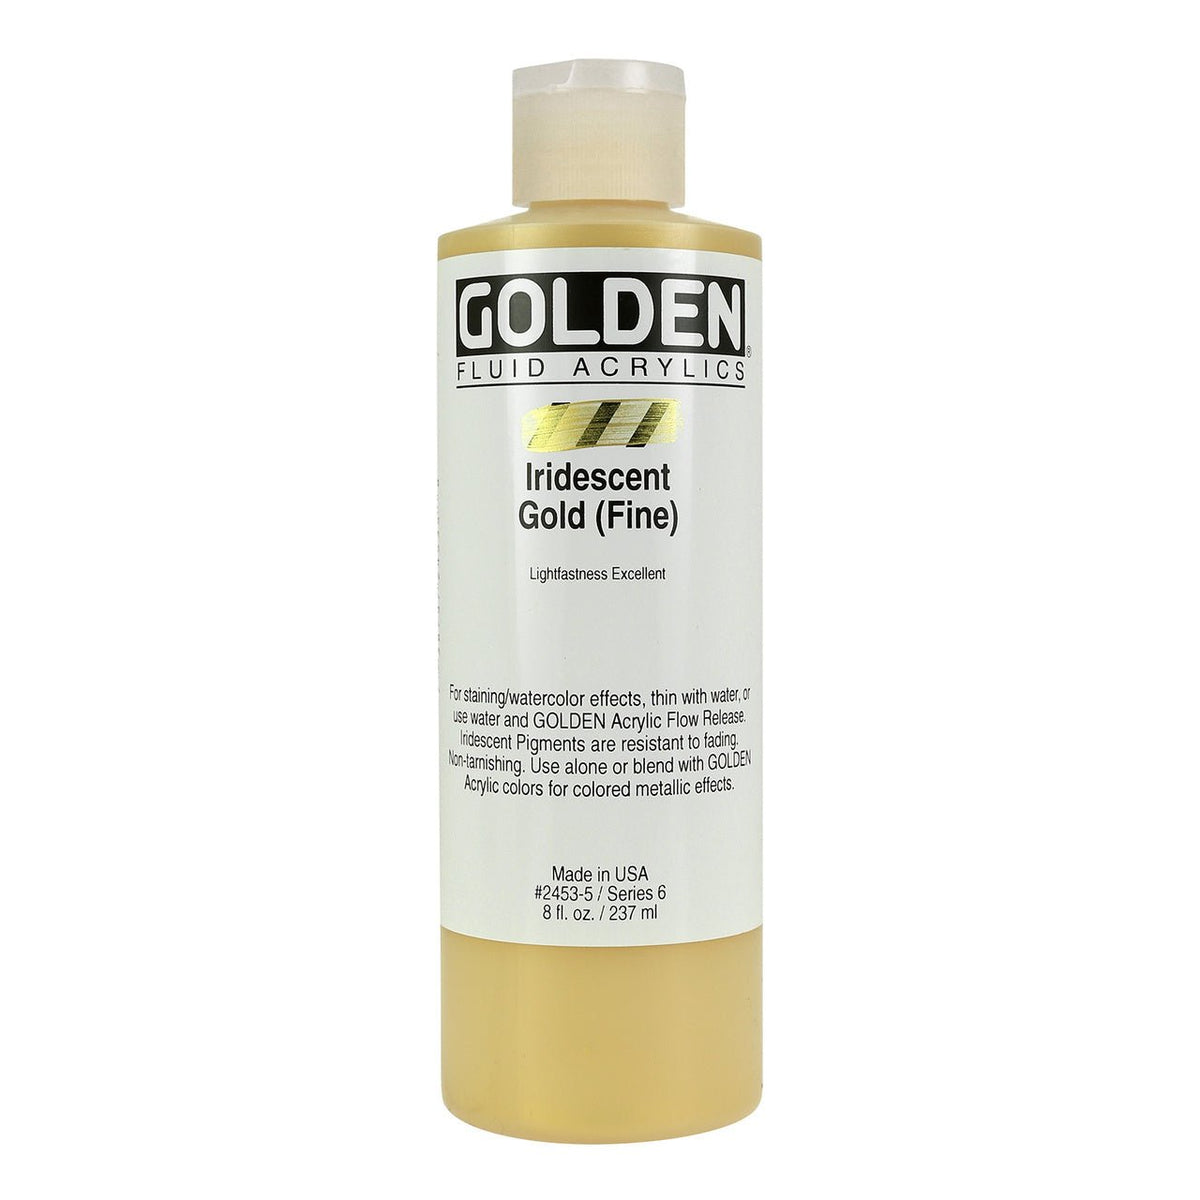 Golden Fluid Acrylic Iridescent Gold (fine) 8 oz - merriartist.com